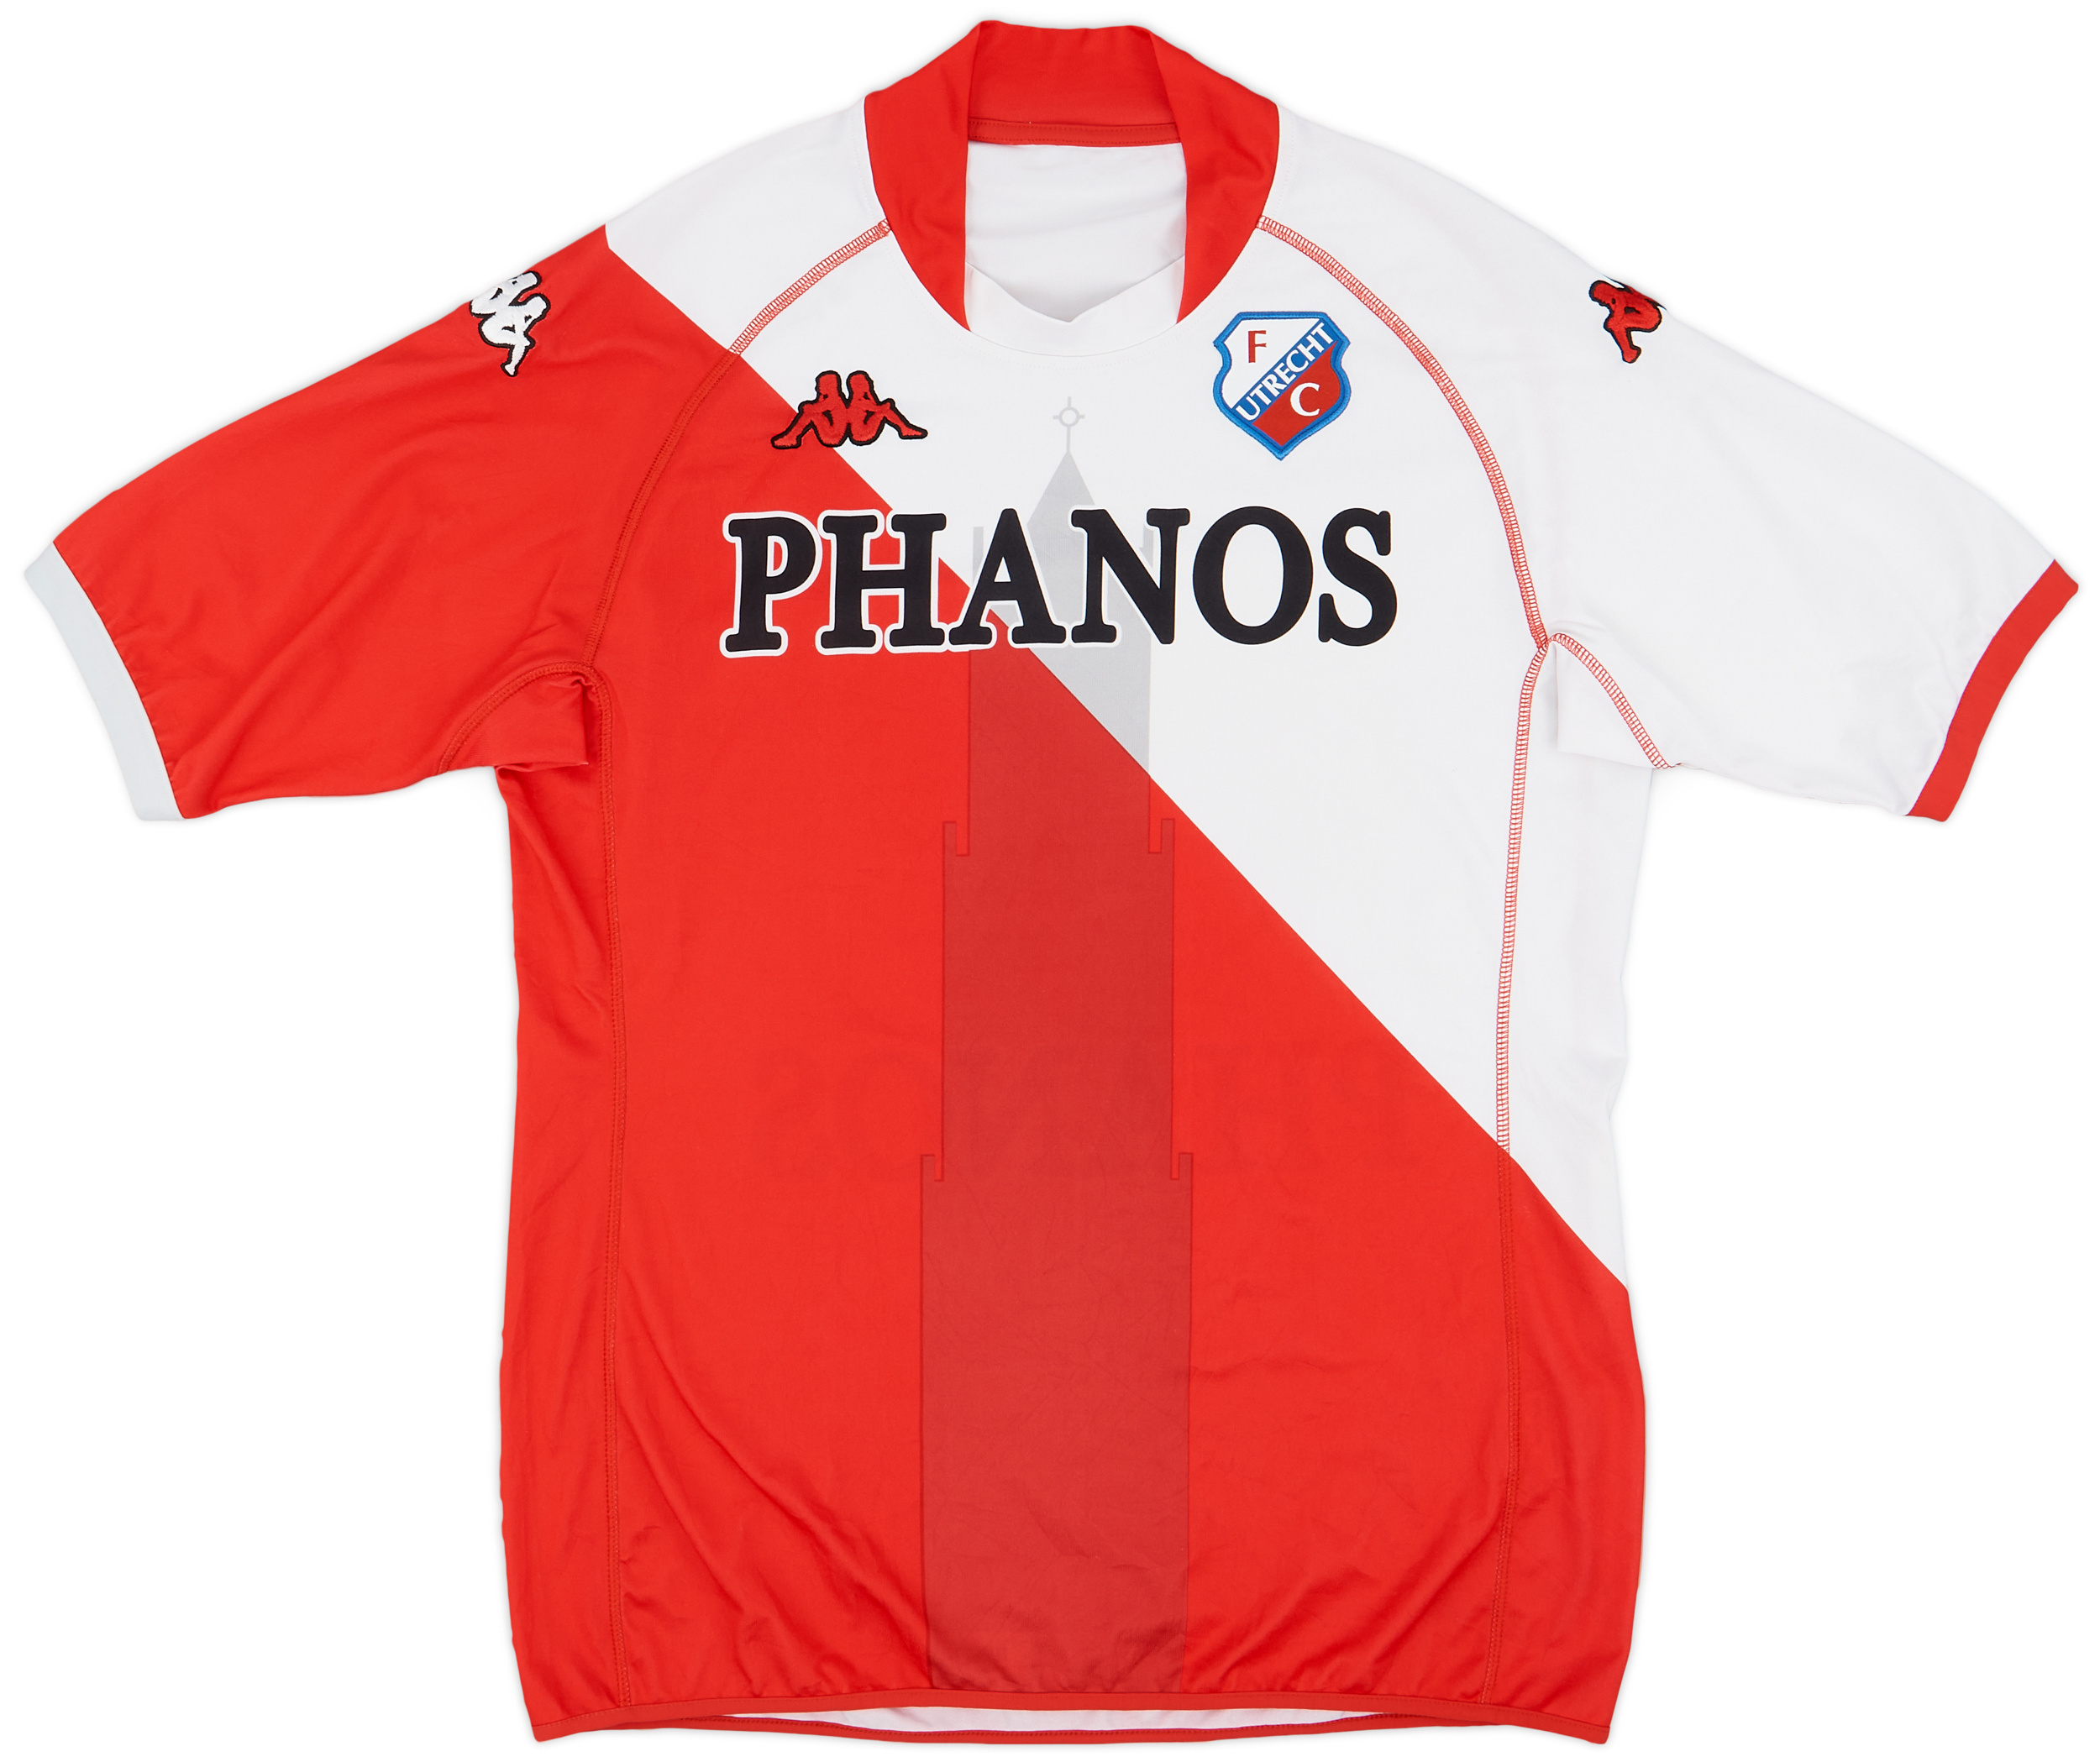 Retro FC Utrecht Shirt